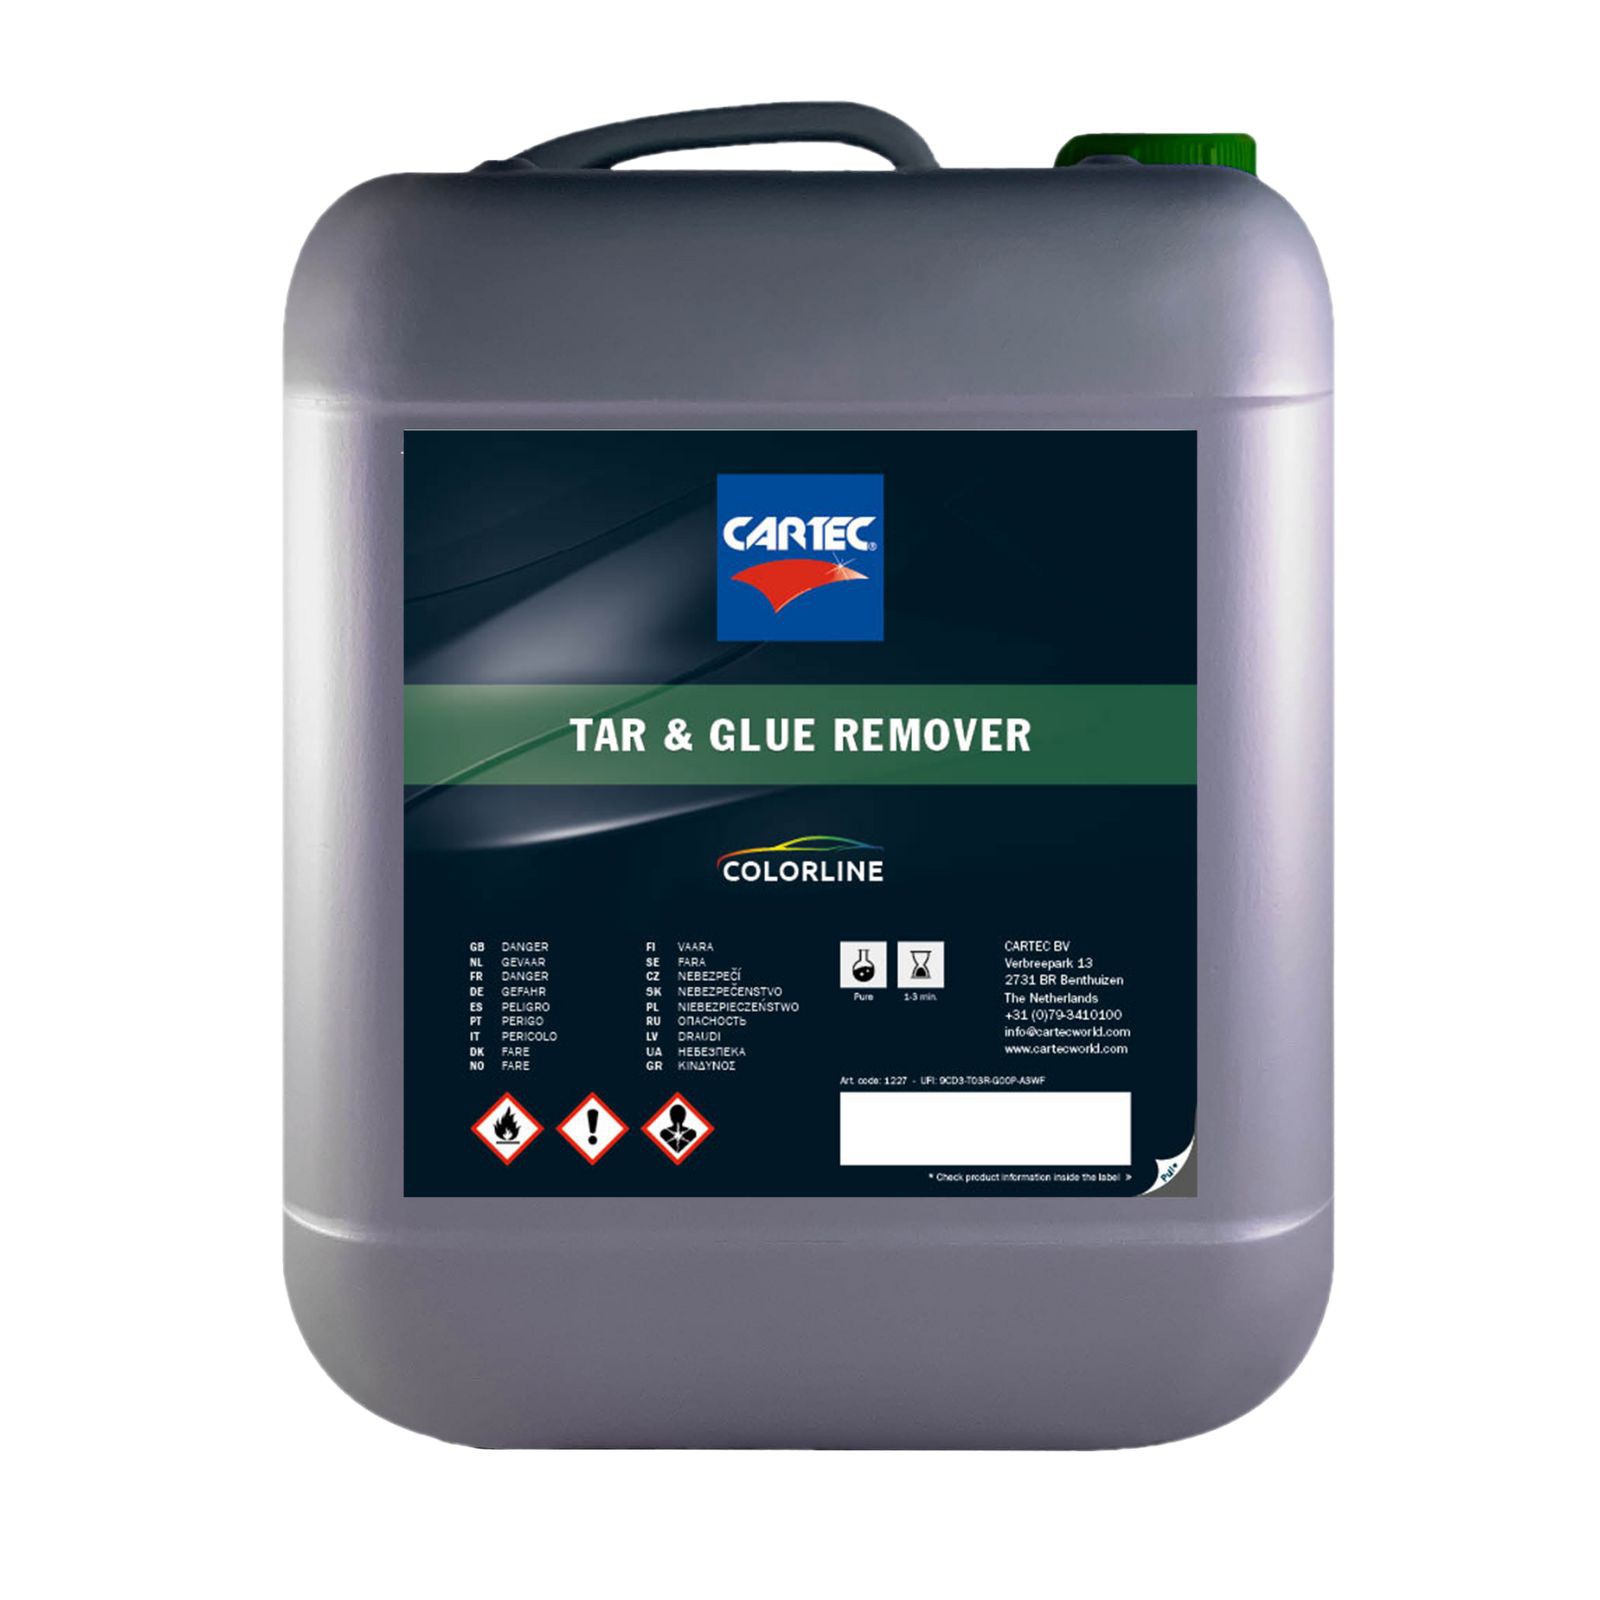 How to use Cartec Tar & Glue Remover? 